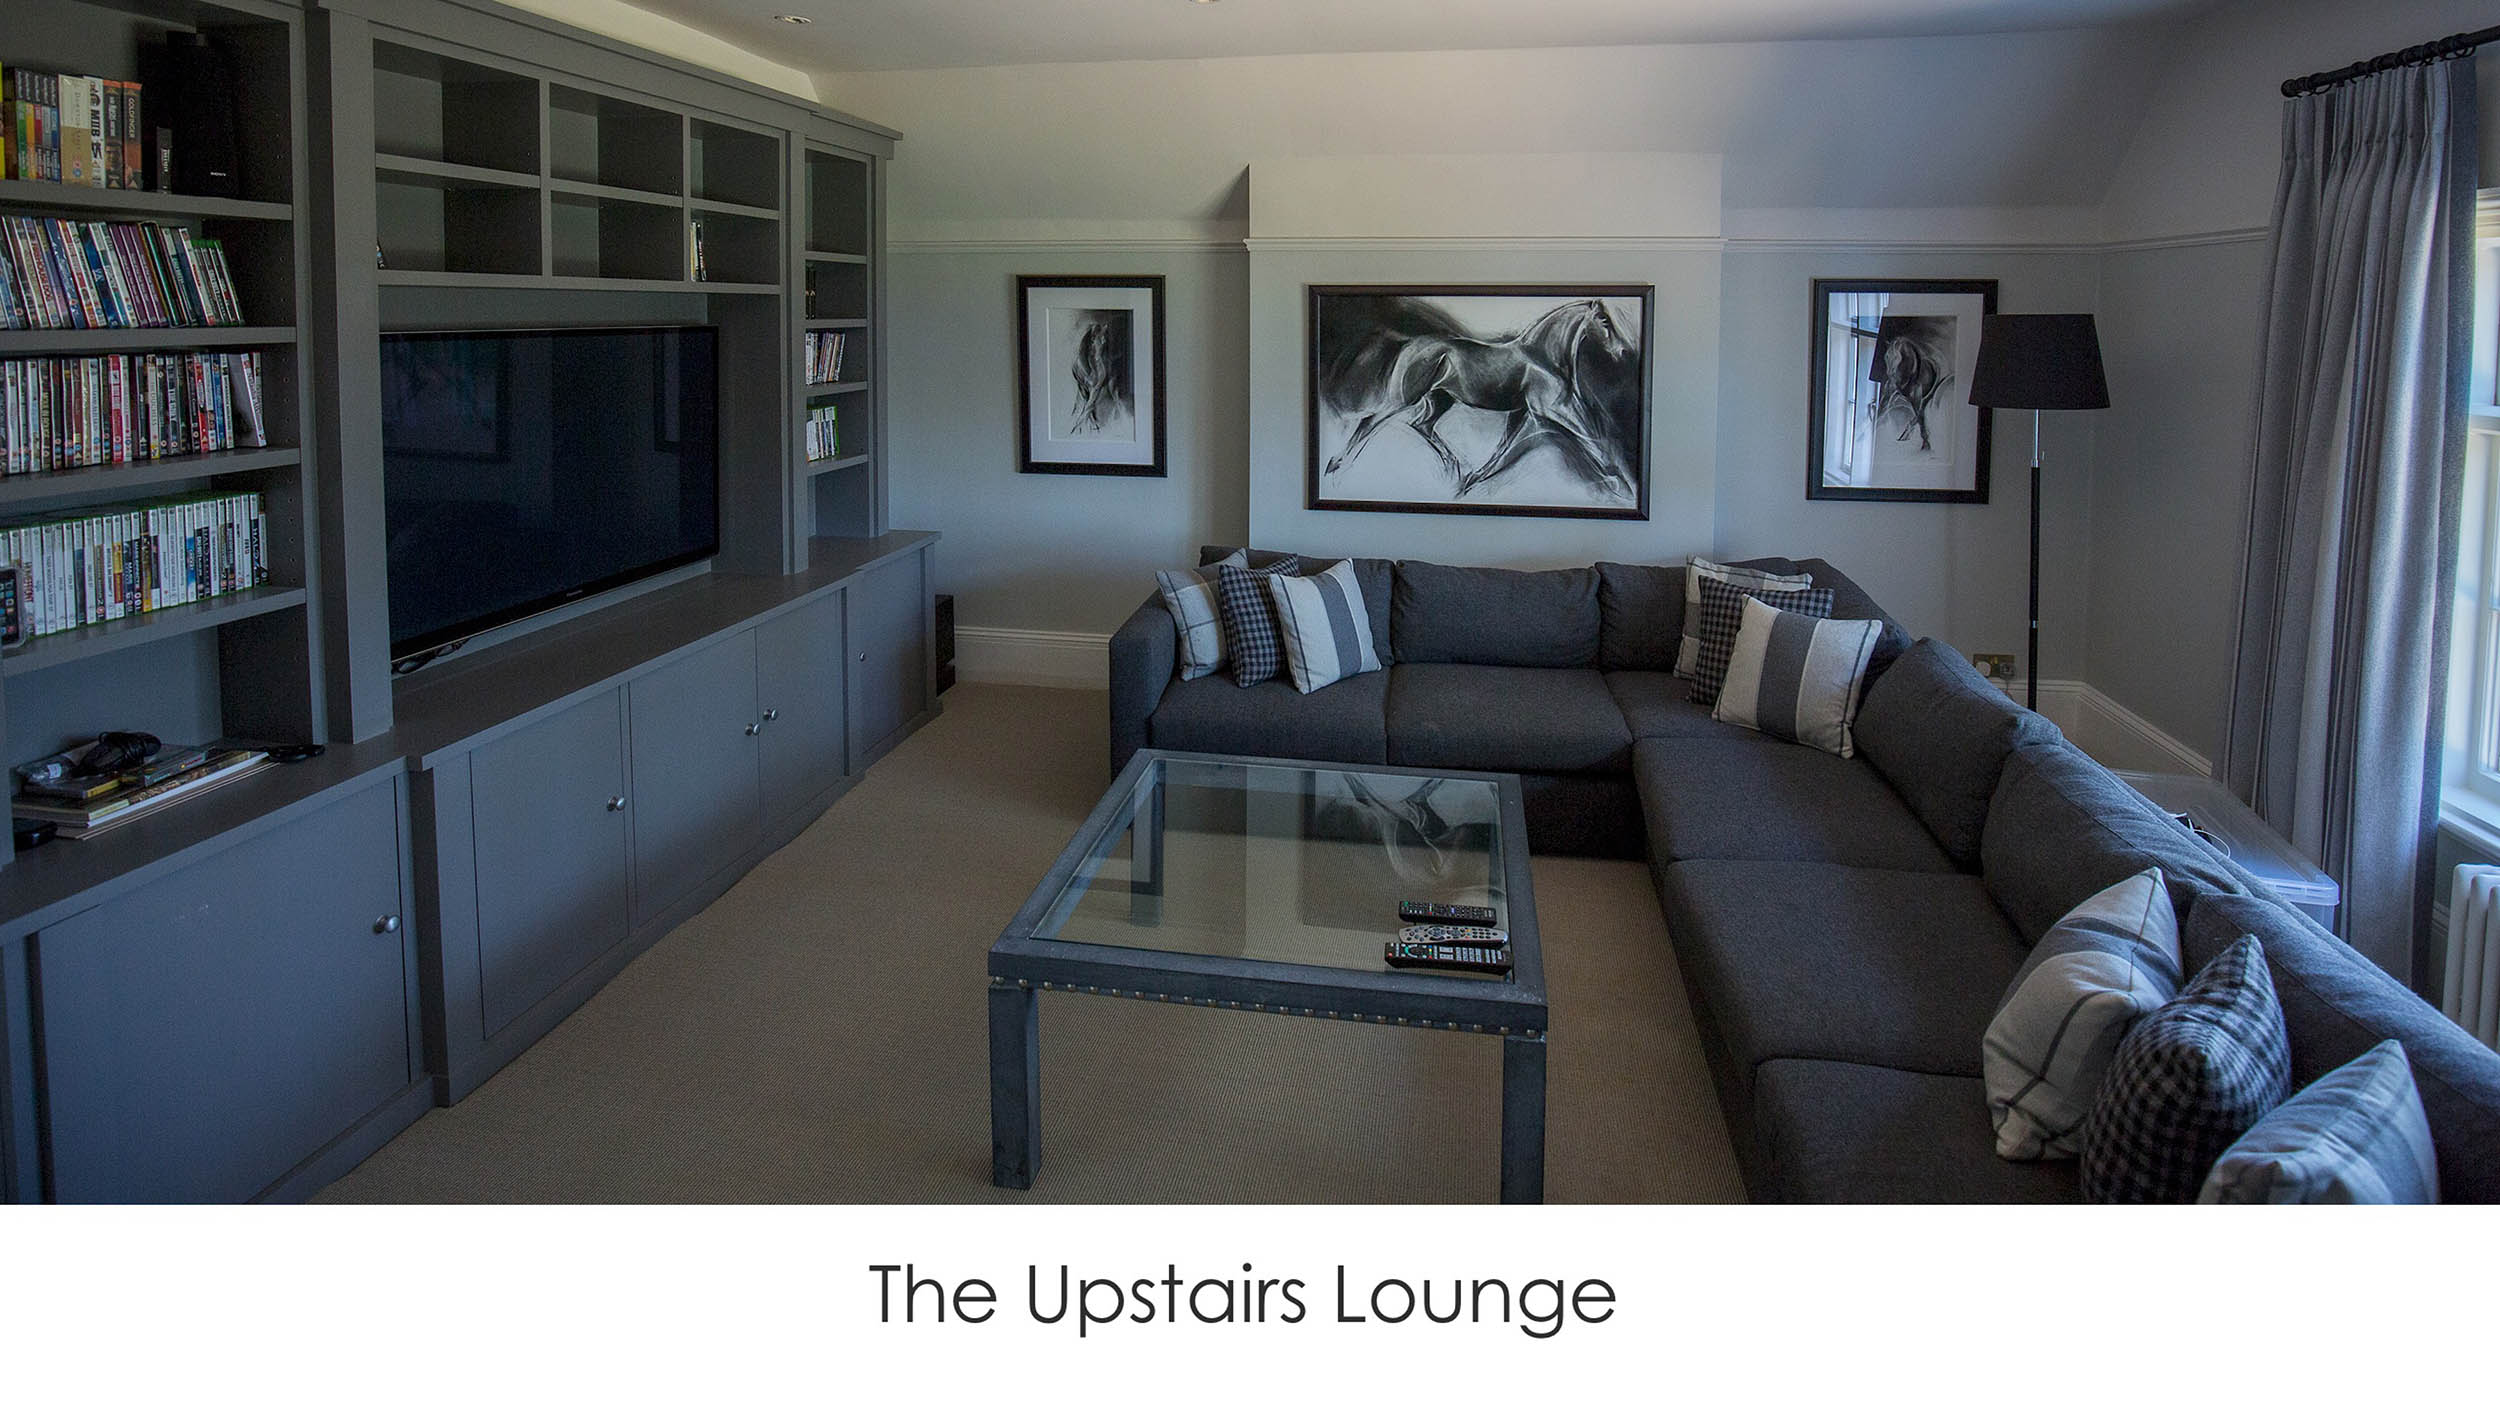 Upstairs Lounge - Pennybridge House - Real Estate Development Projects by Gabriella Atkinson.